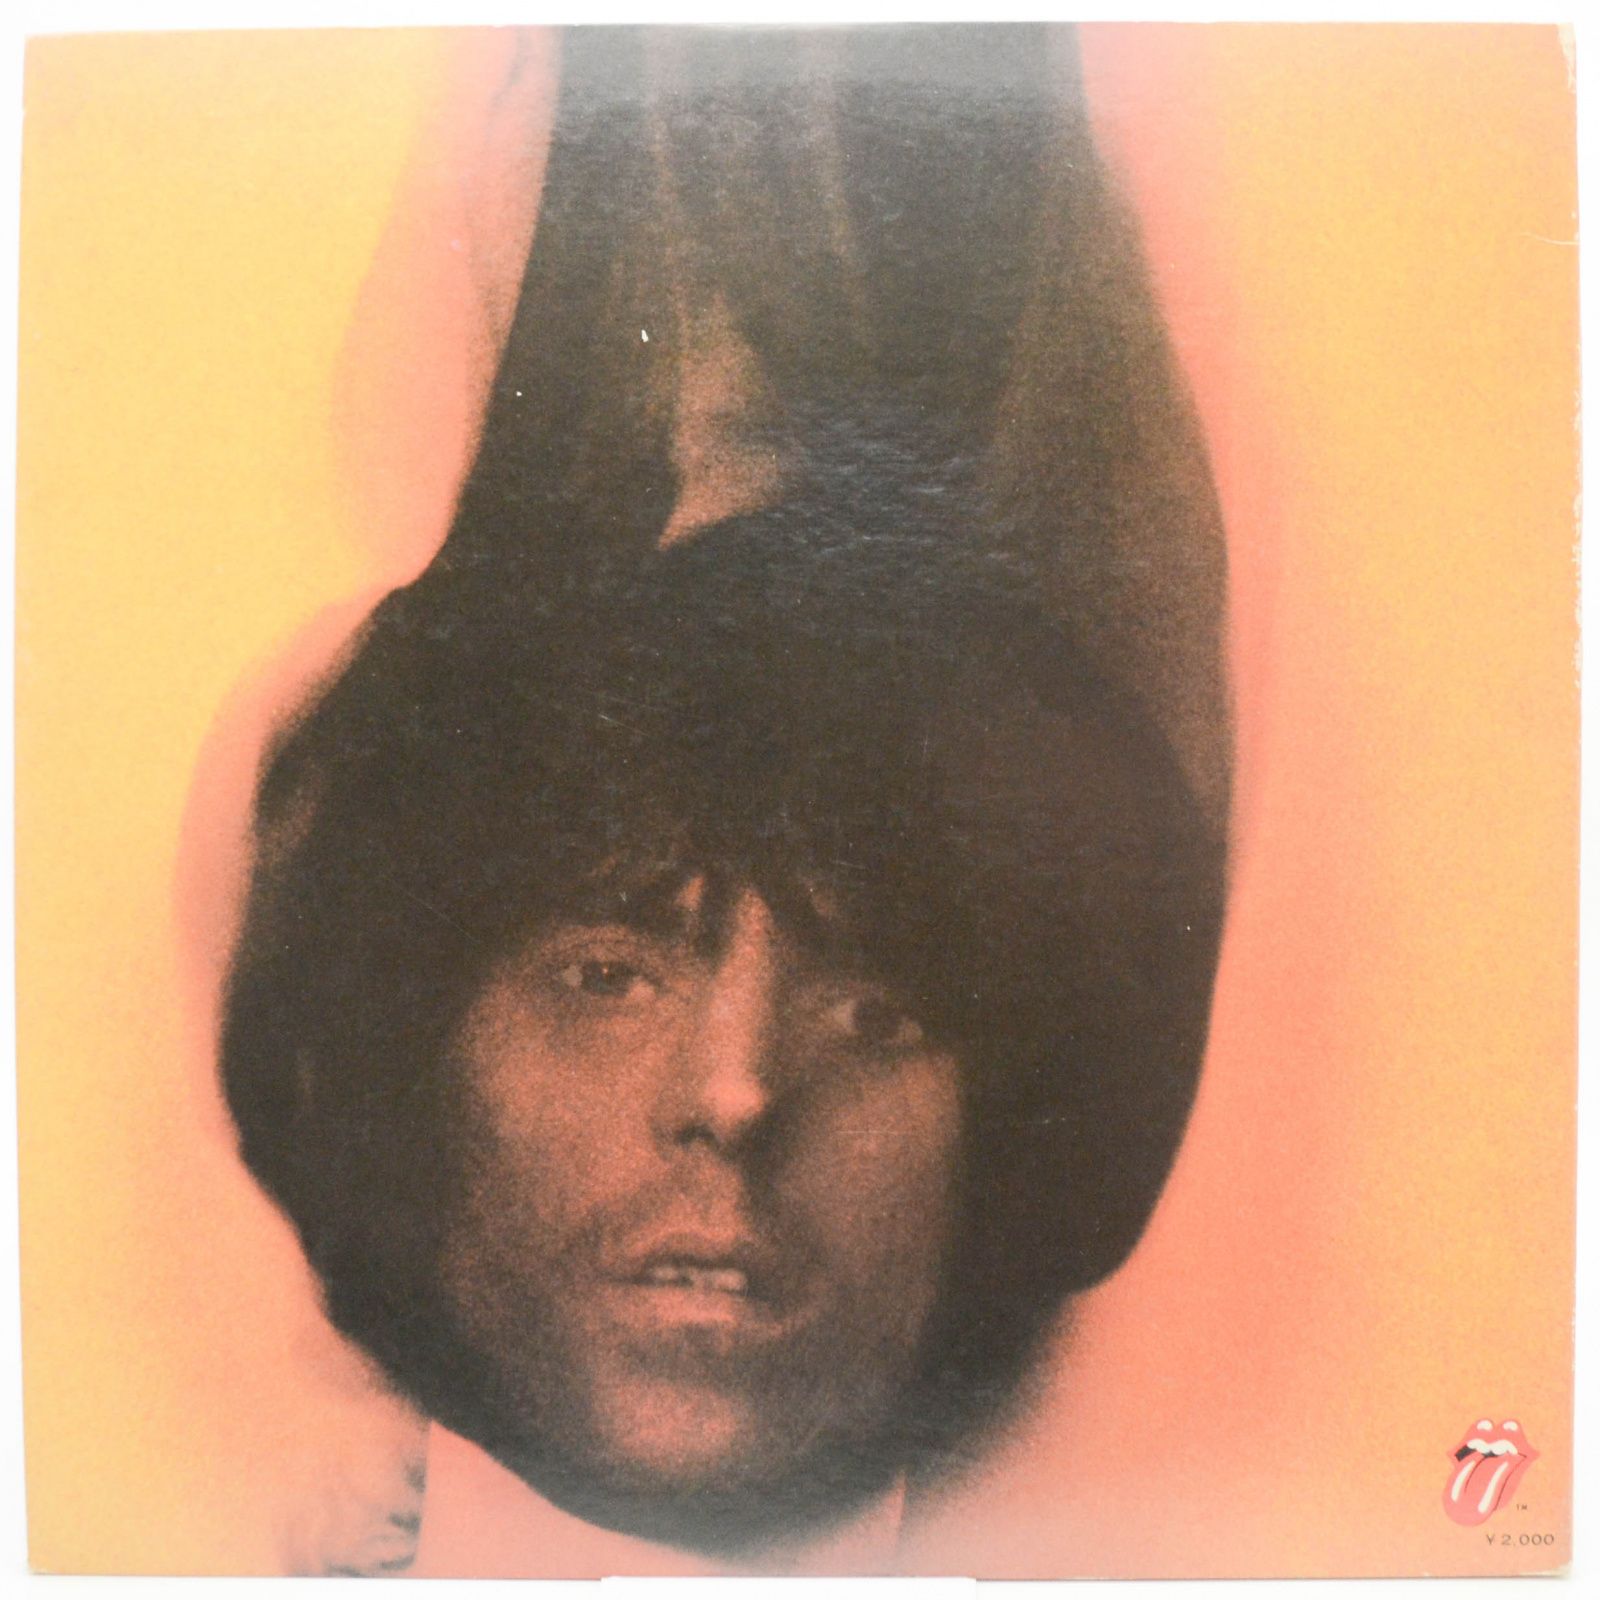 Rolling Stones — Goats Head Soup, 1973